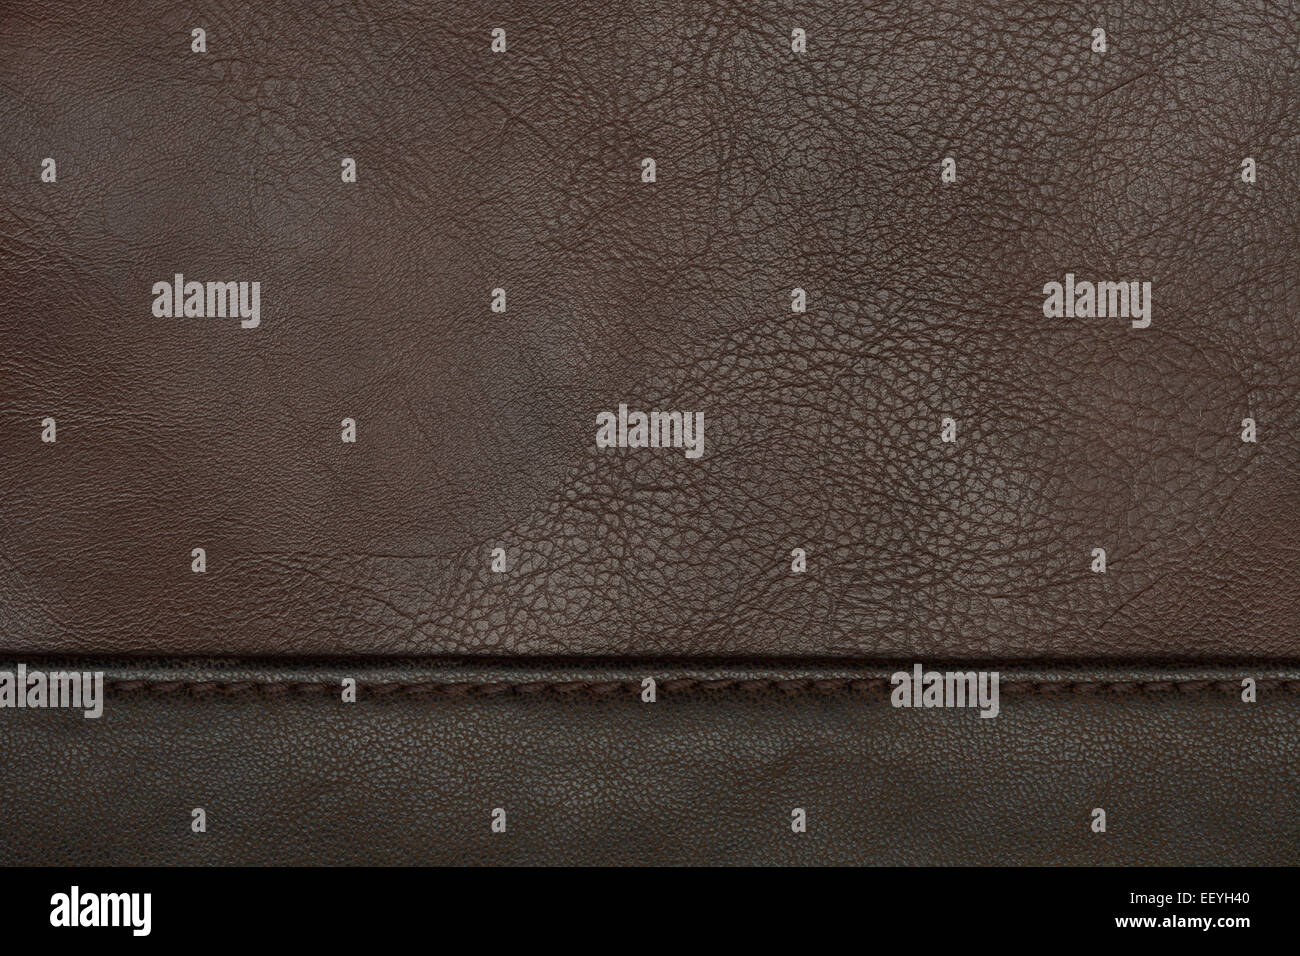 brown leather texture closeup detail Stock Photo